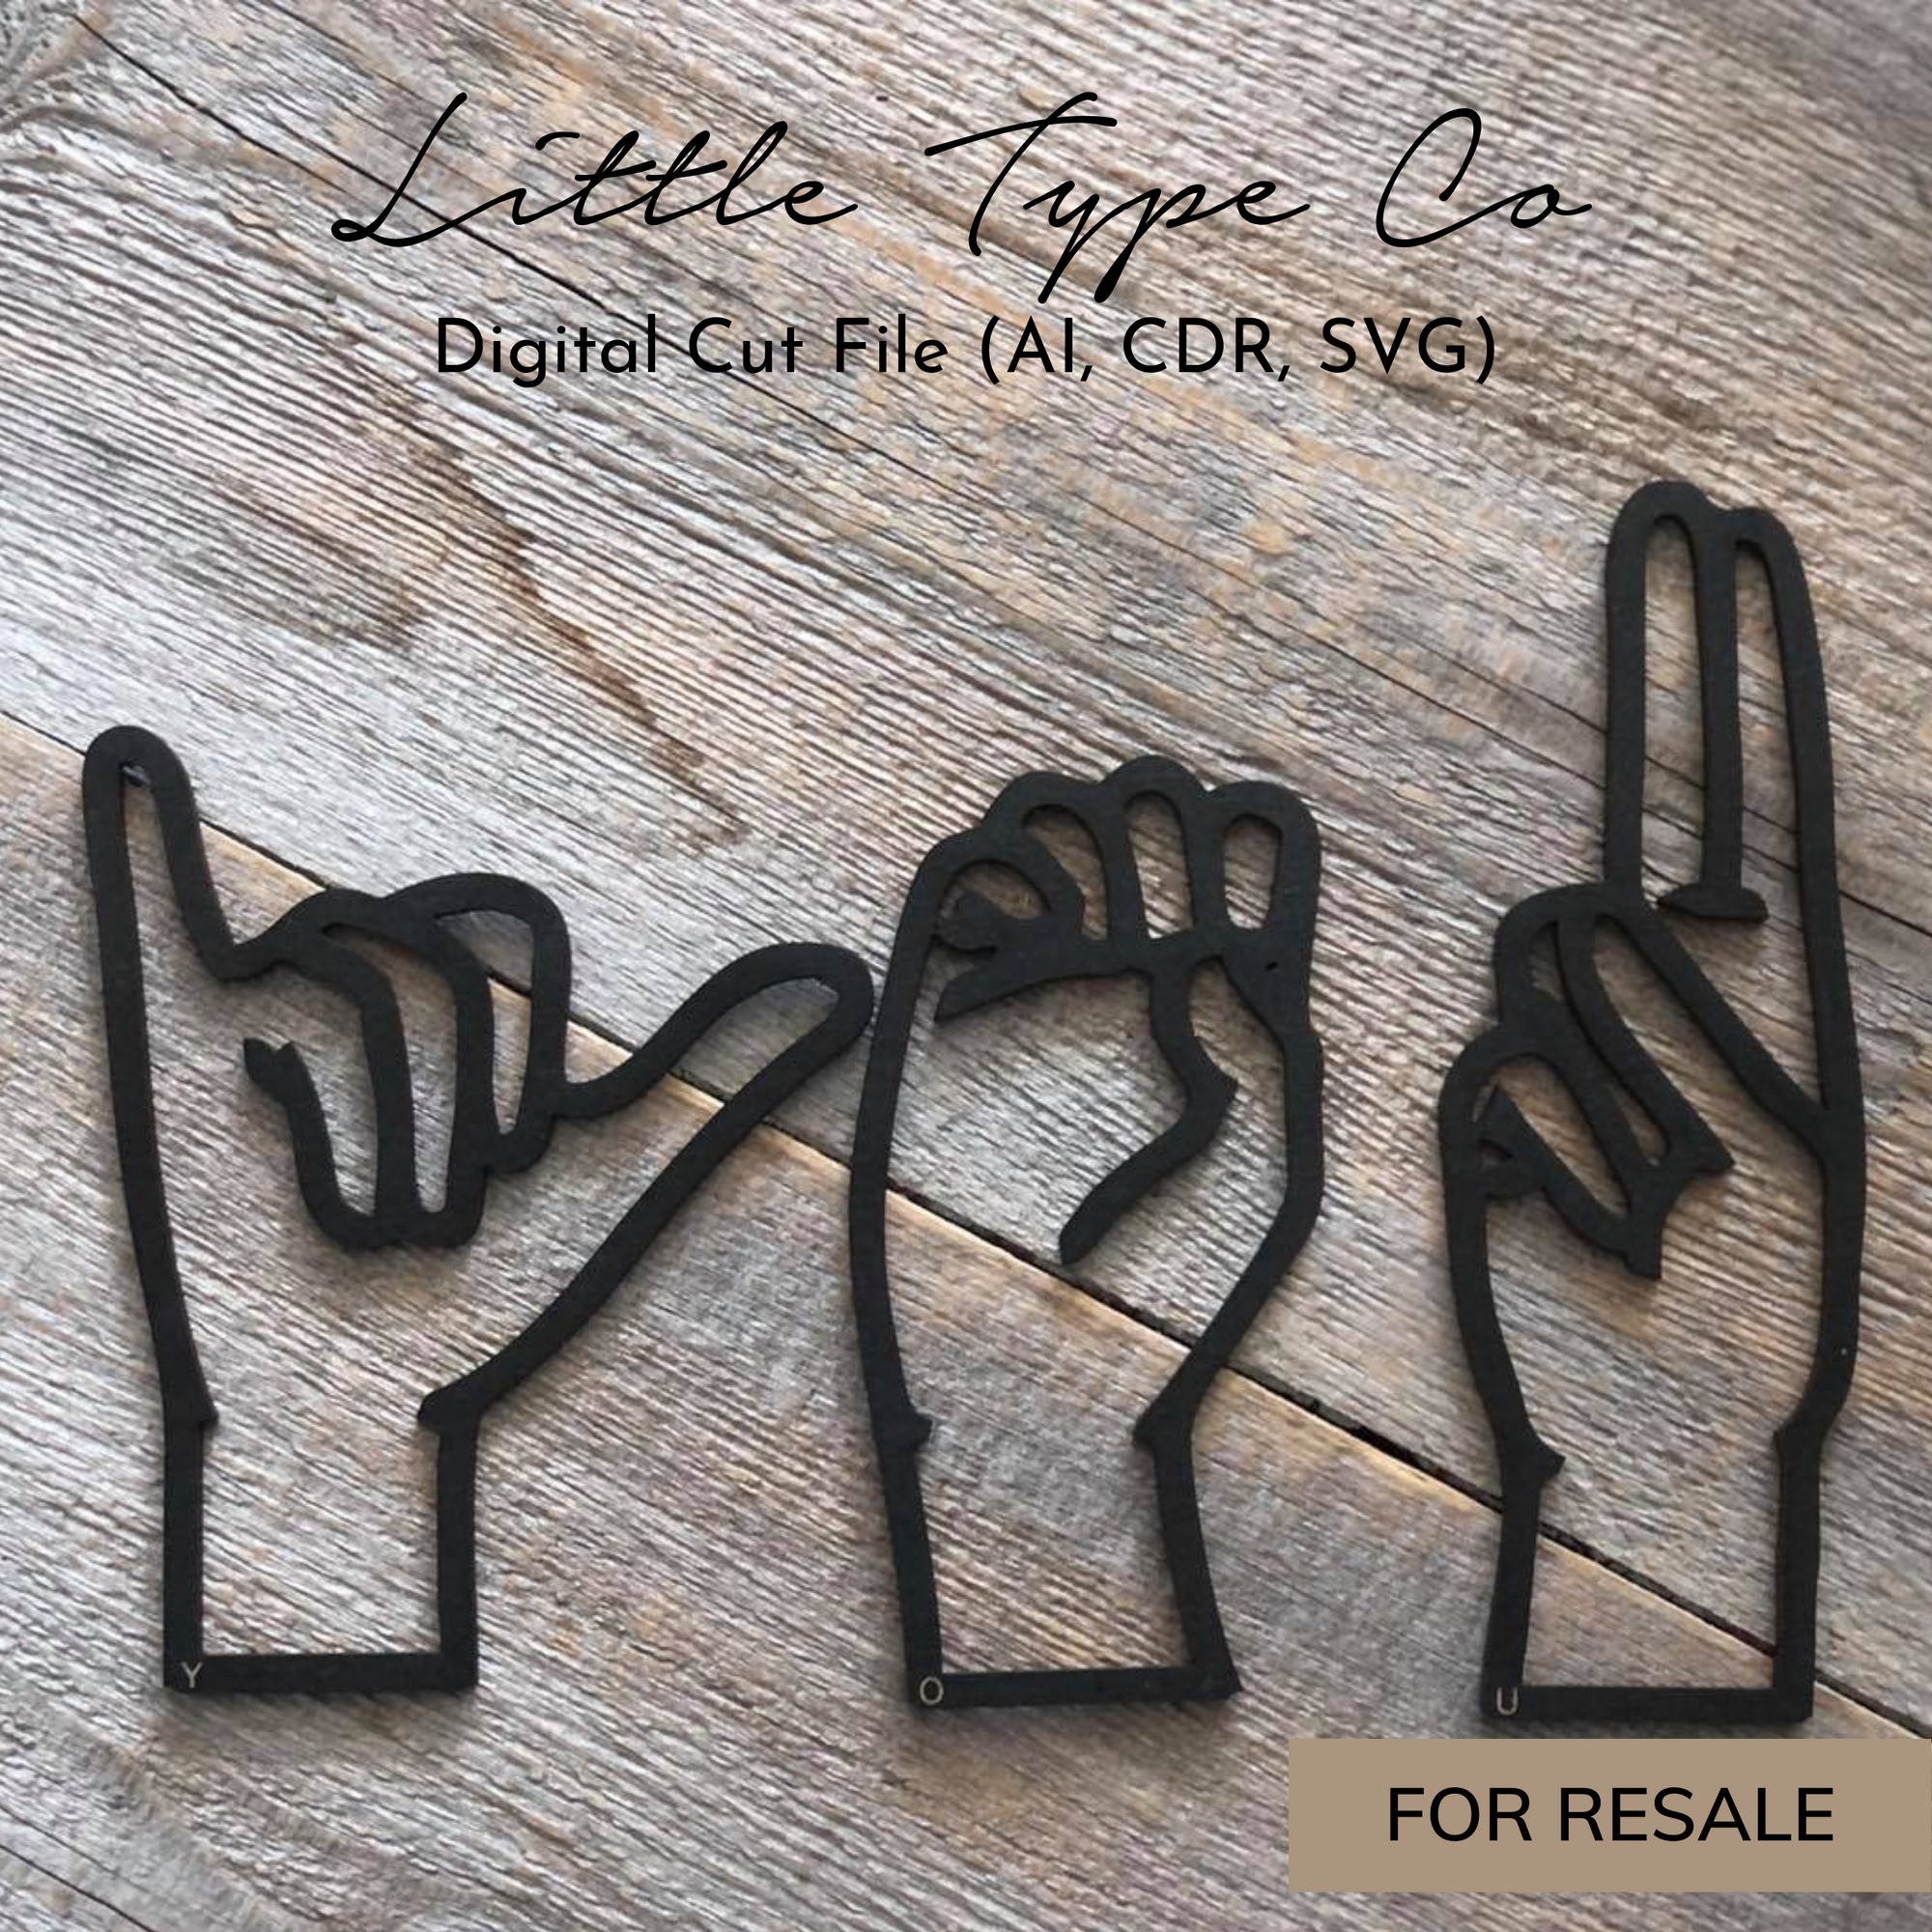 FOR RESALE Digital Little Type Co Cut File - Sign Language